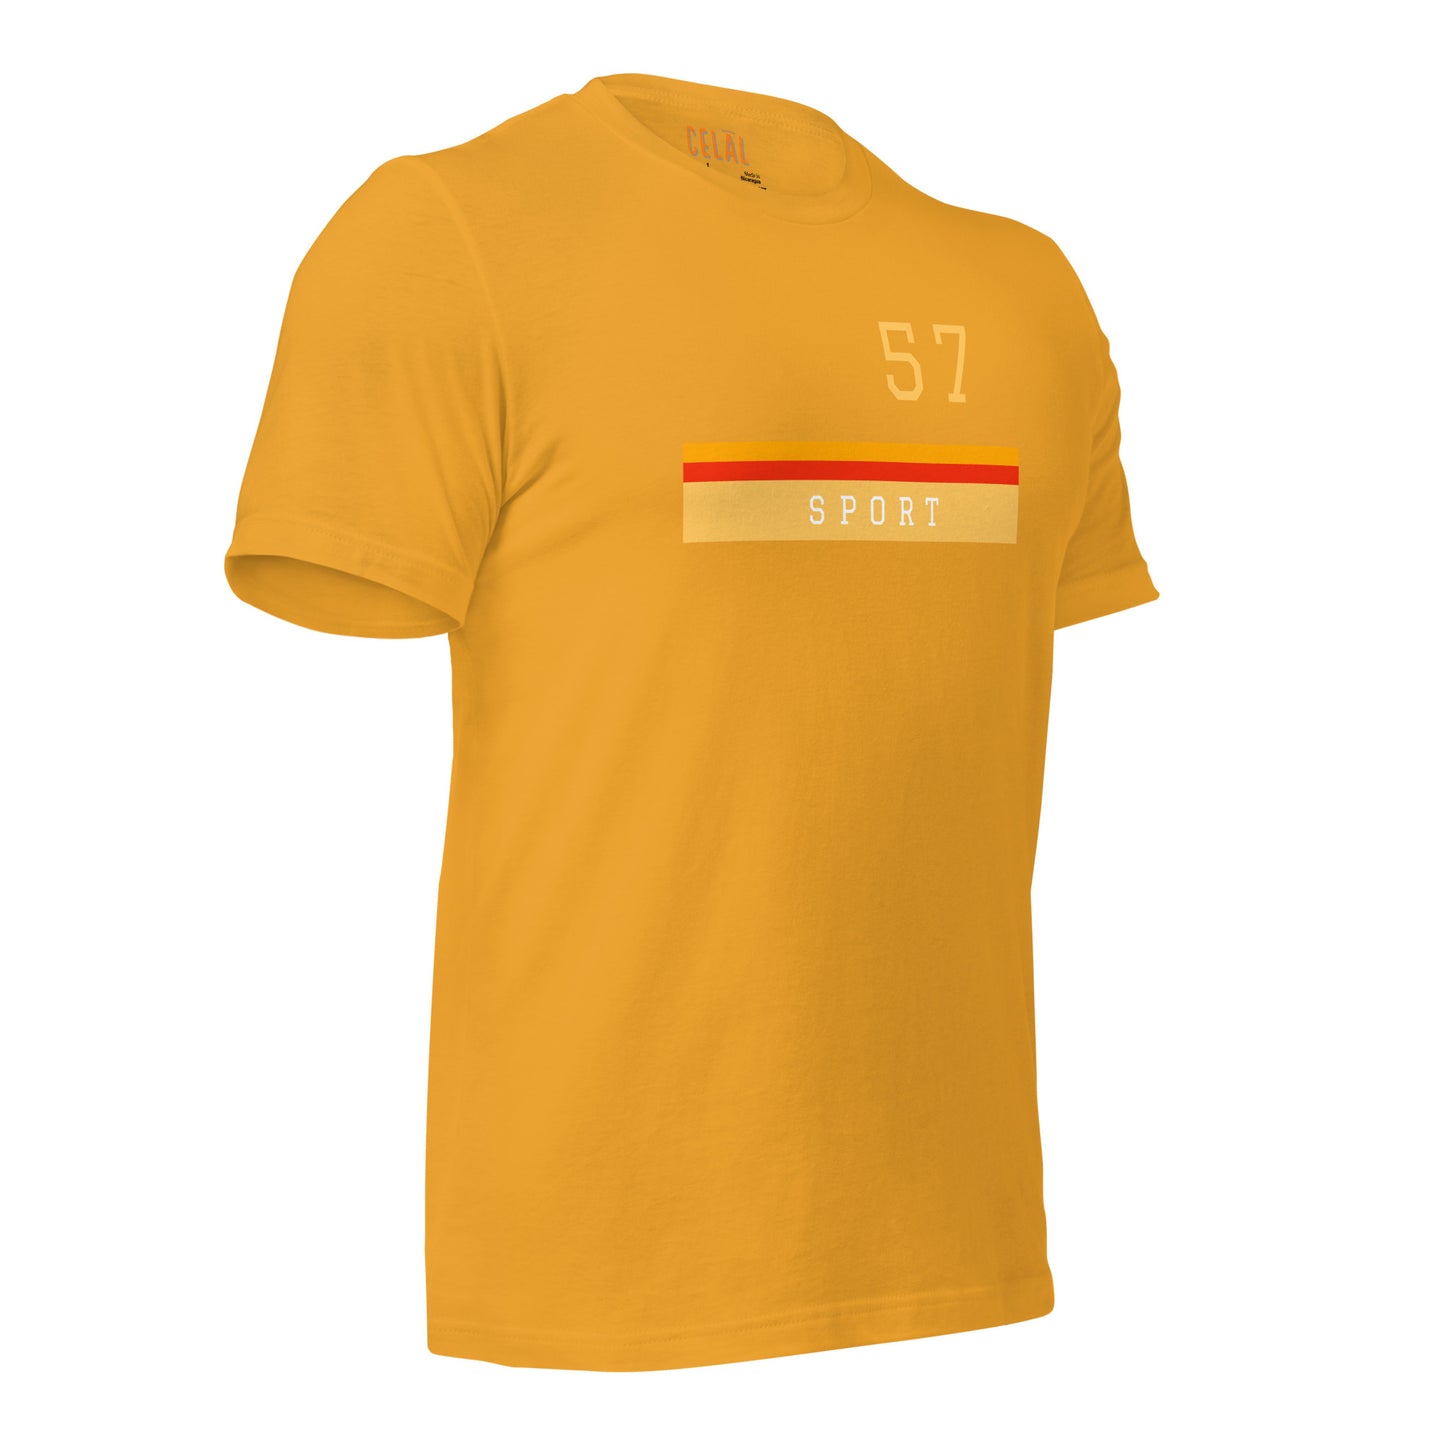 57 Unisex t-shirt